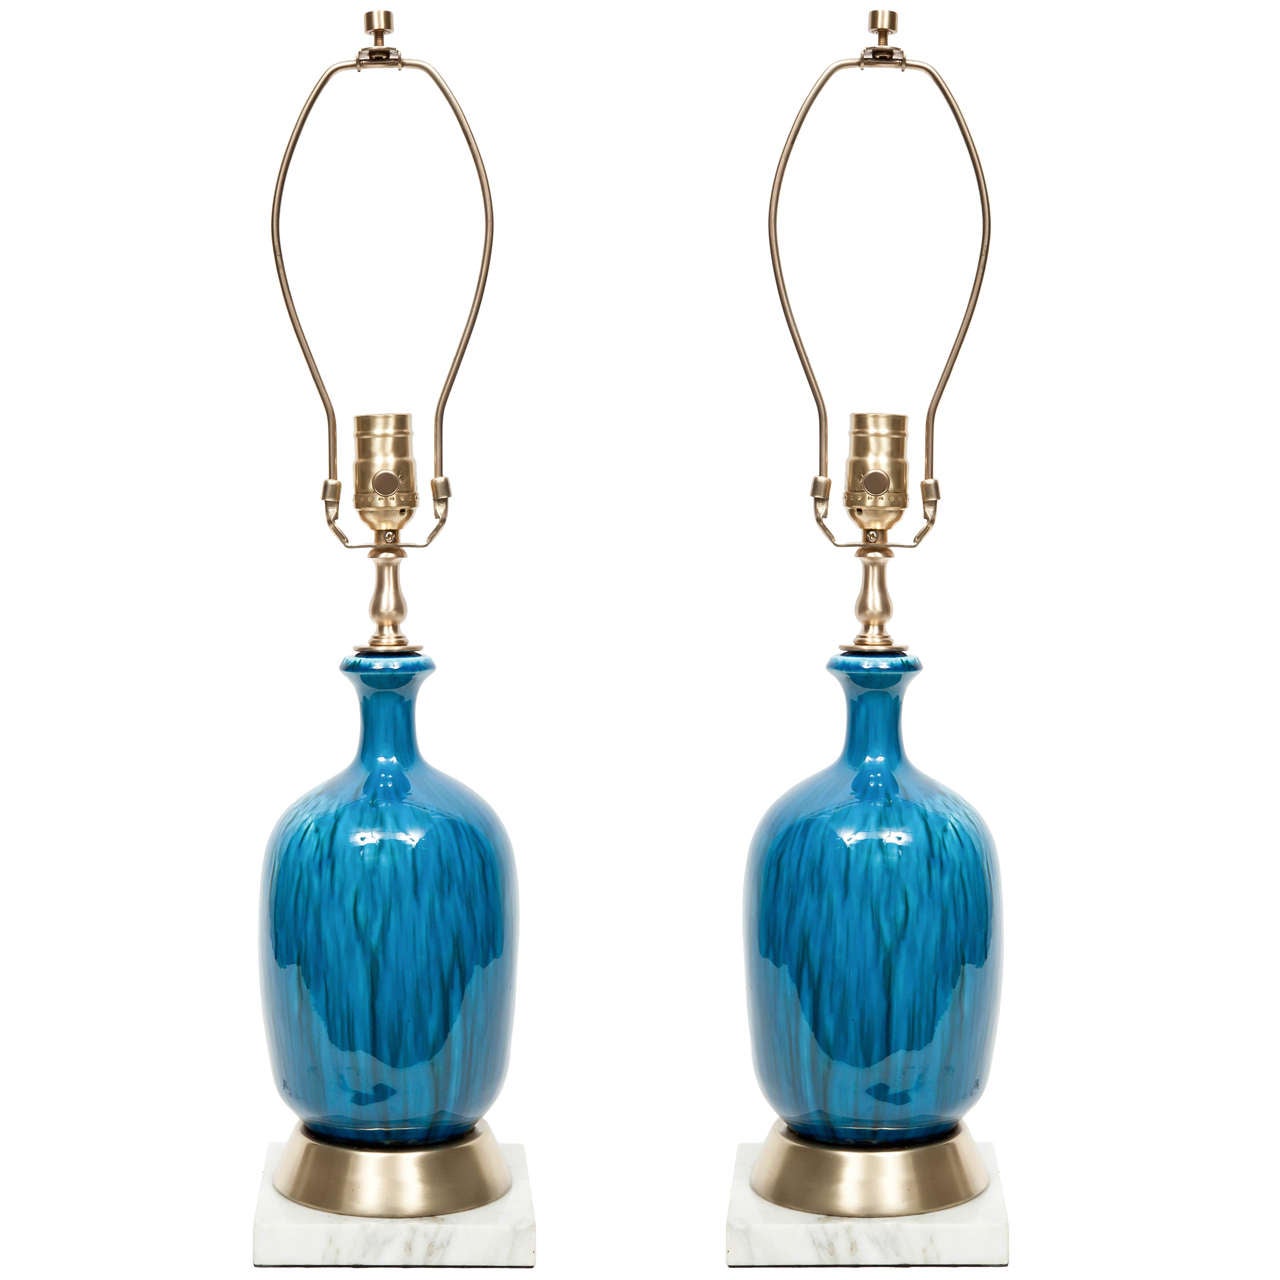 Pair of Italian Blue Ceramic Lamps by Bitossi